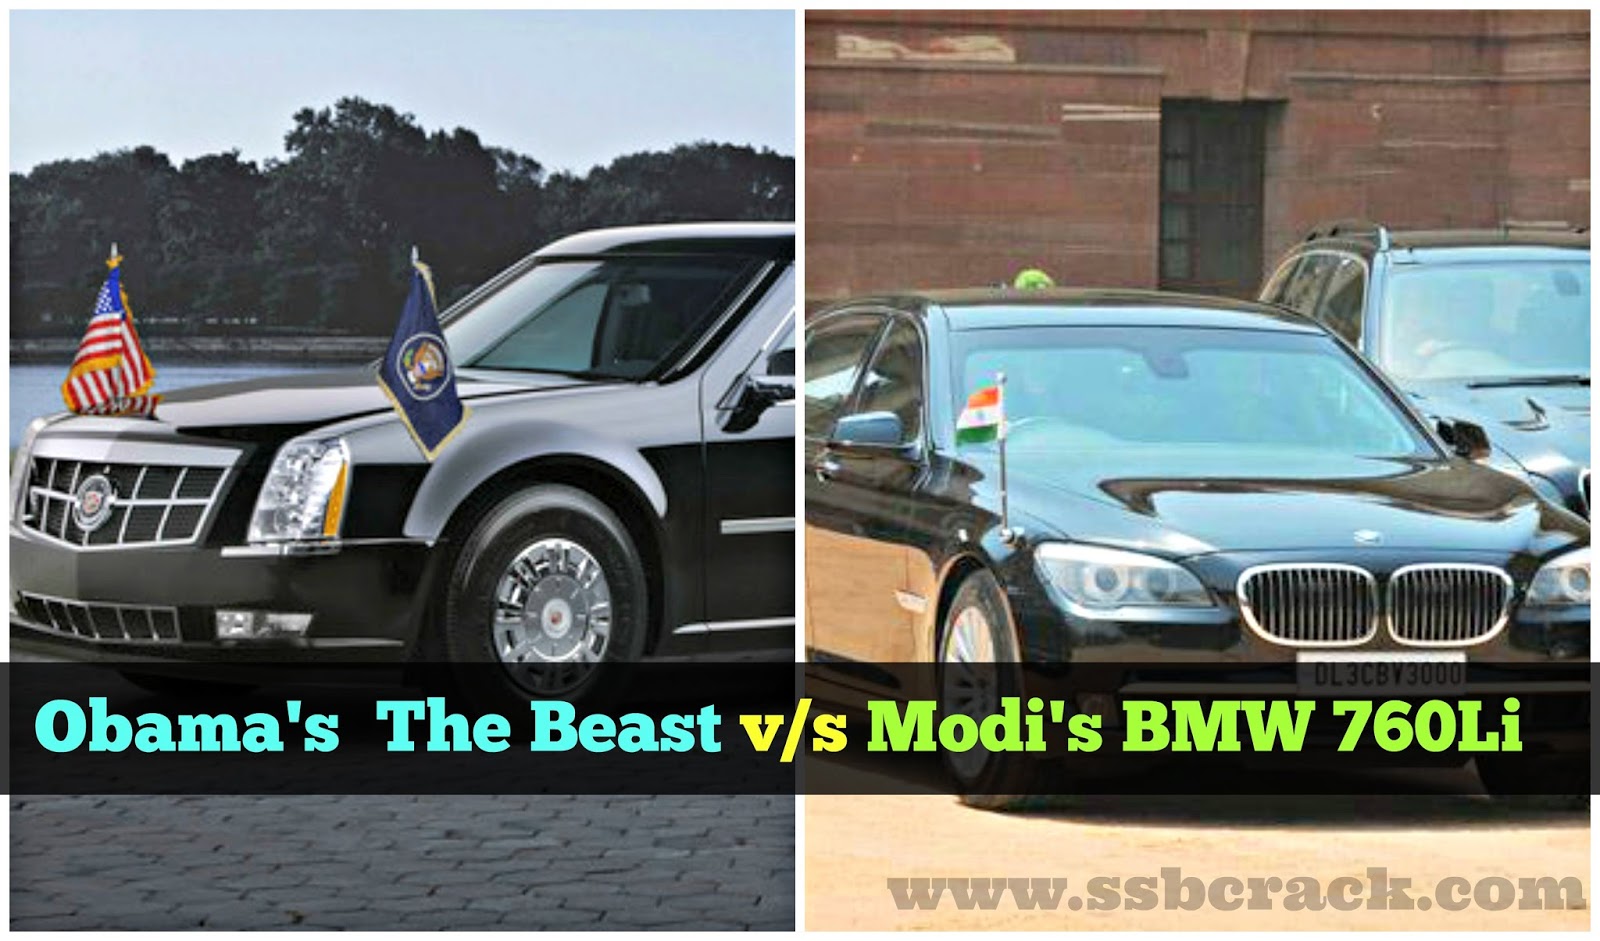 Obama's Cadillac The Beast v/s Modi's BMW 760Li